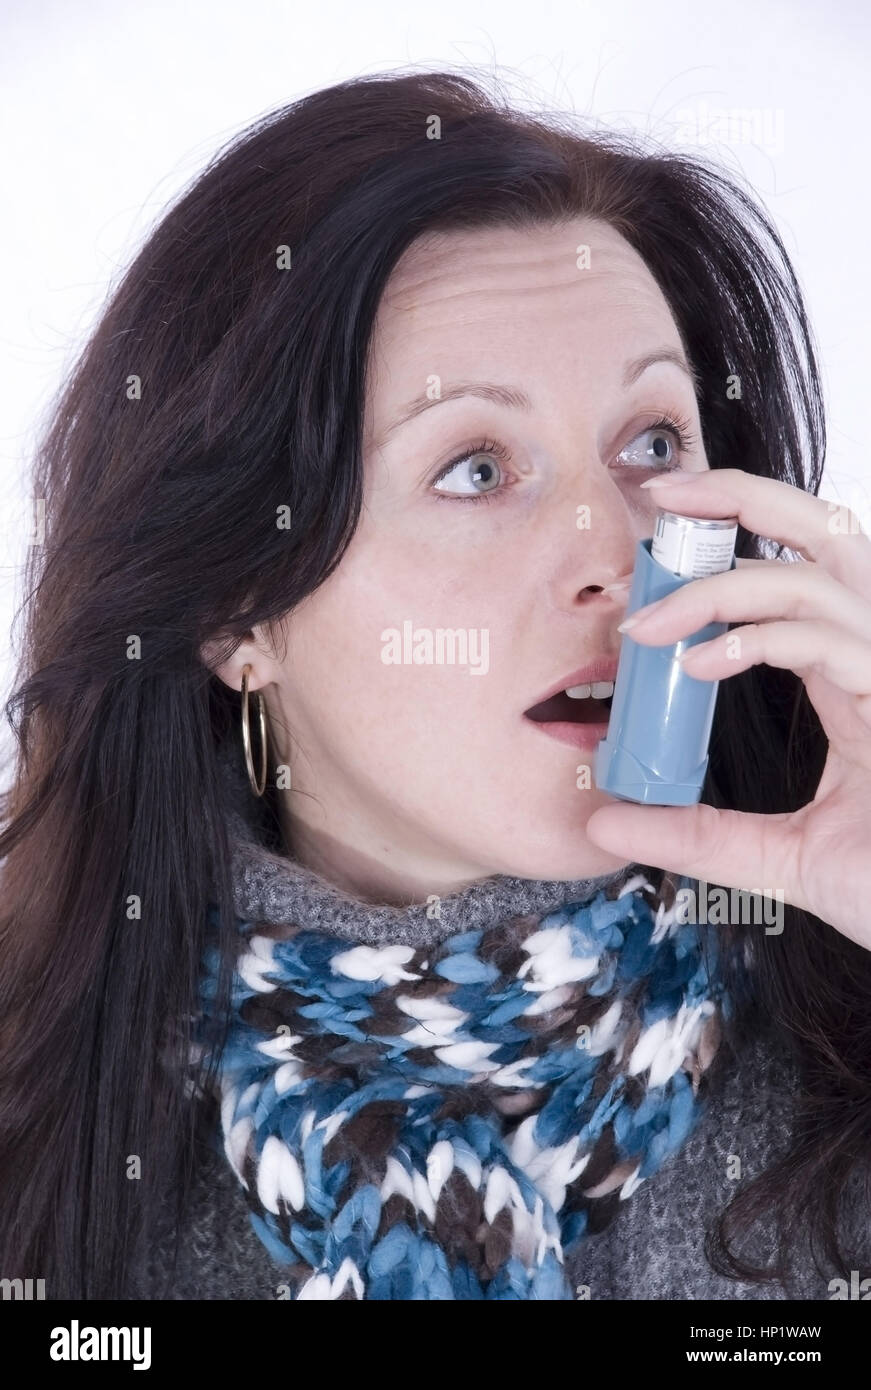 Model release , Junge Frau verwendet Asthmaspray - woman takes asthma spray Stock Photo